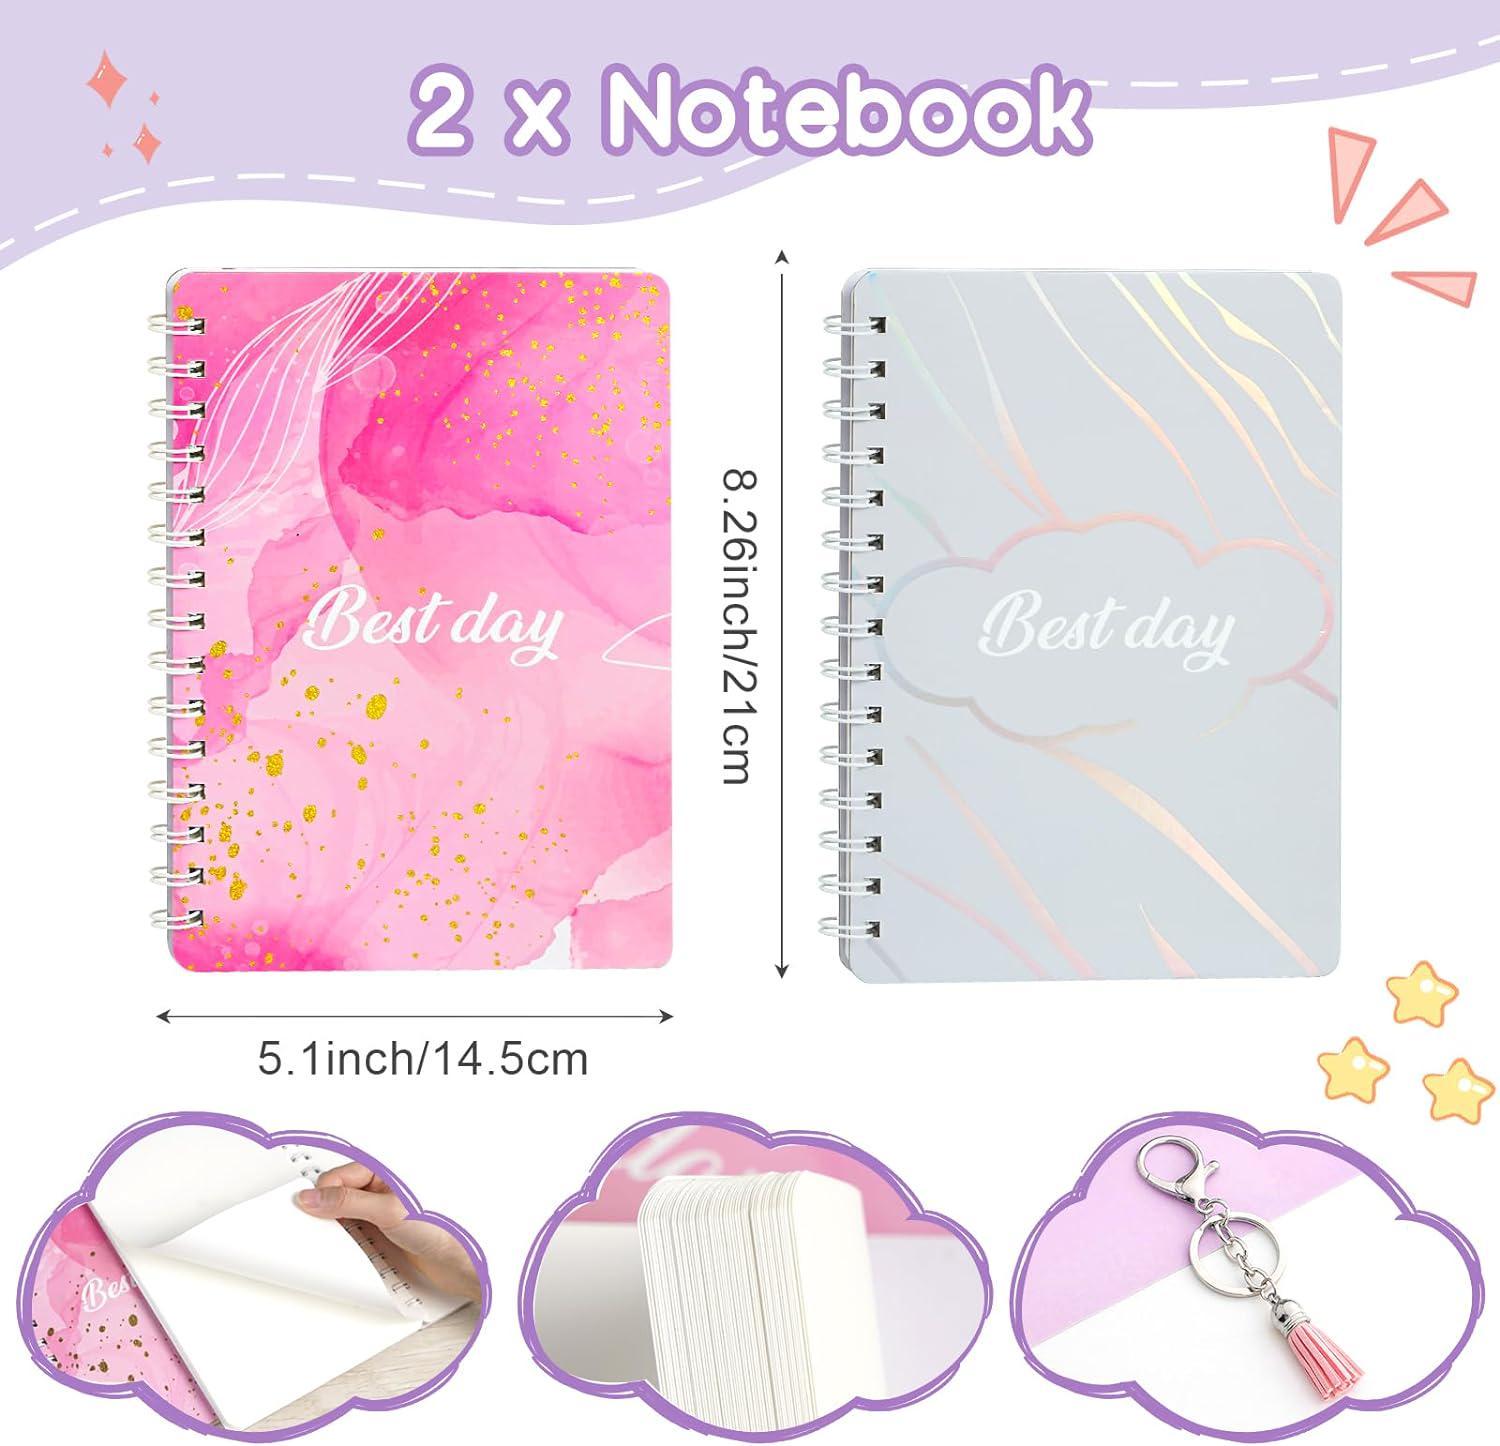  DIY Journal Kit for Girls - Great Gift for 8-14 Year